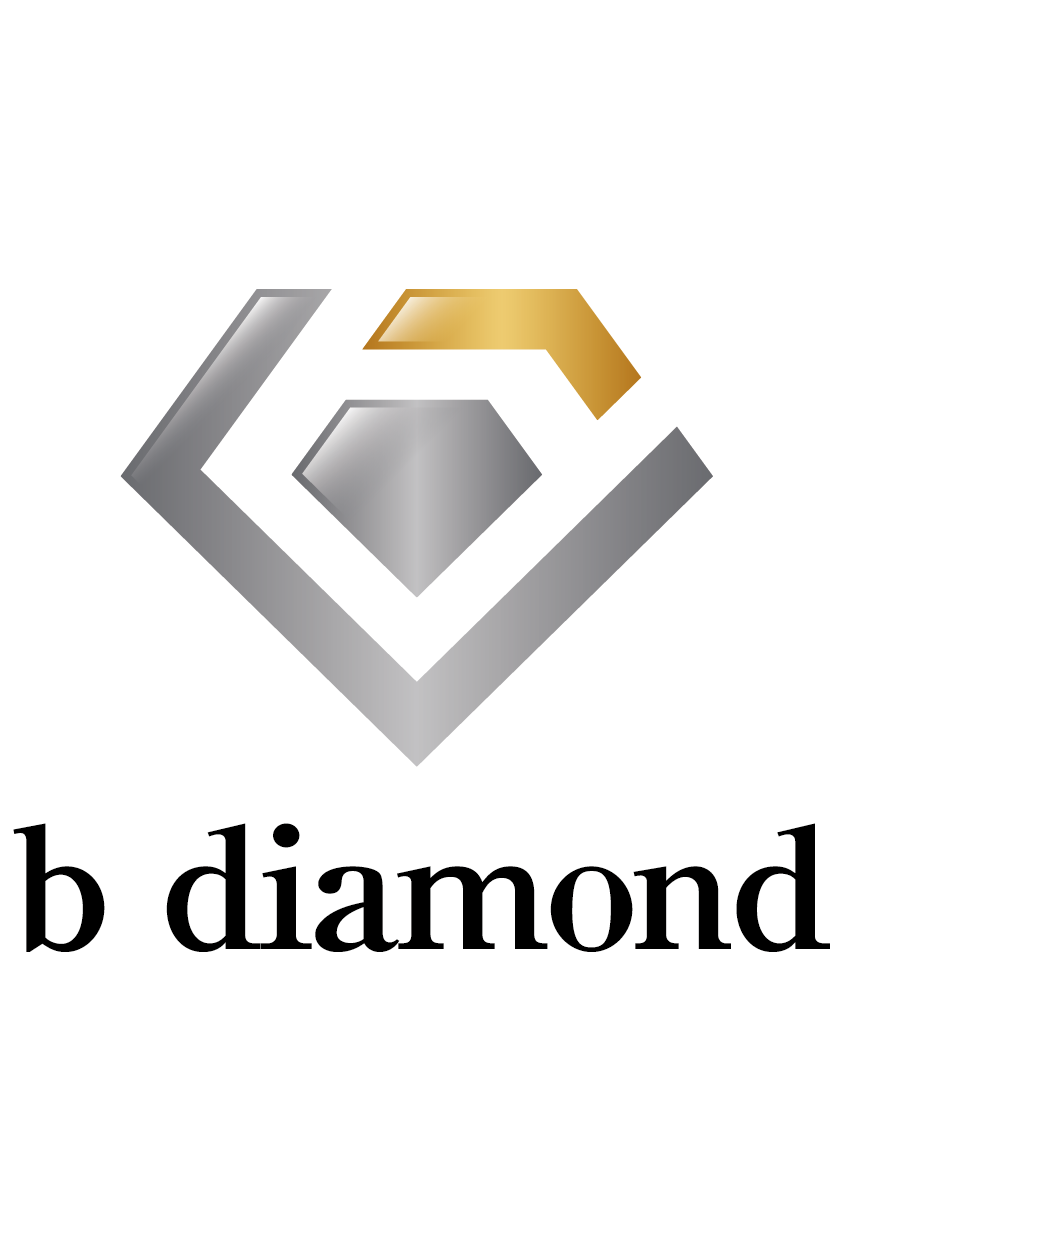 b diamond会社ロゴ